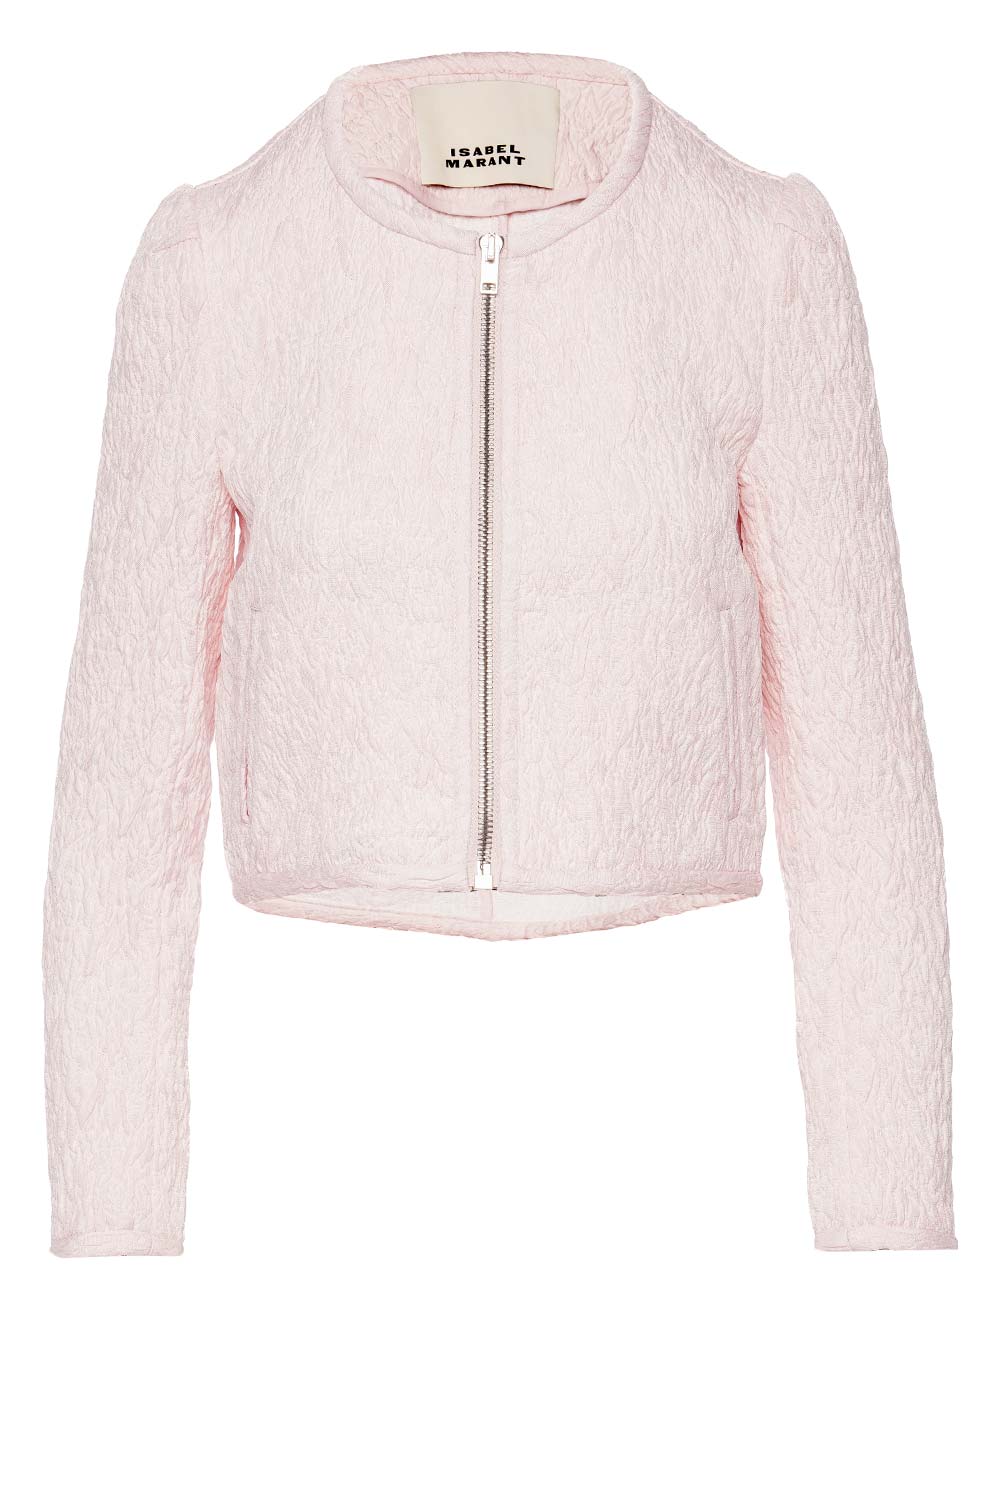 Isabel Marant Palmire Light Pink Textured Jacket